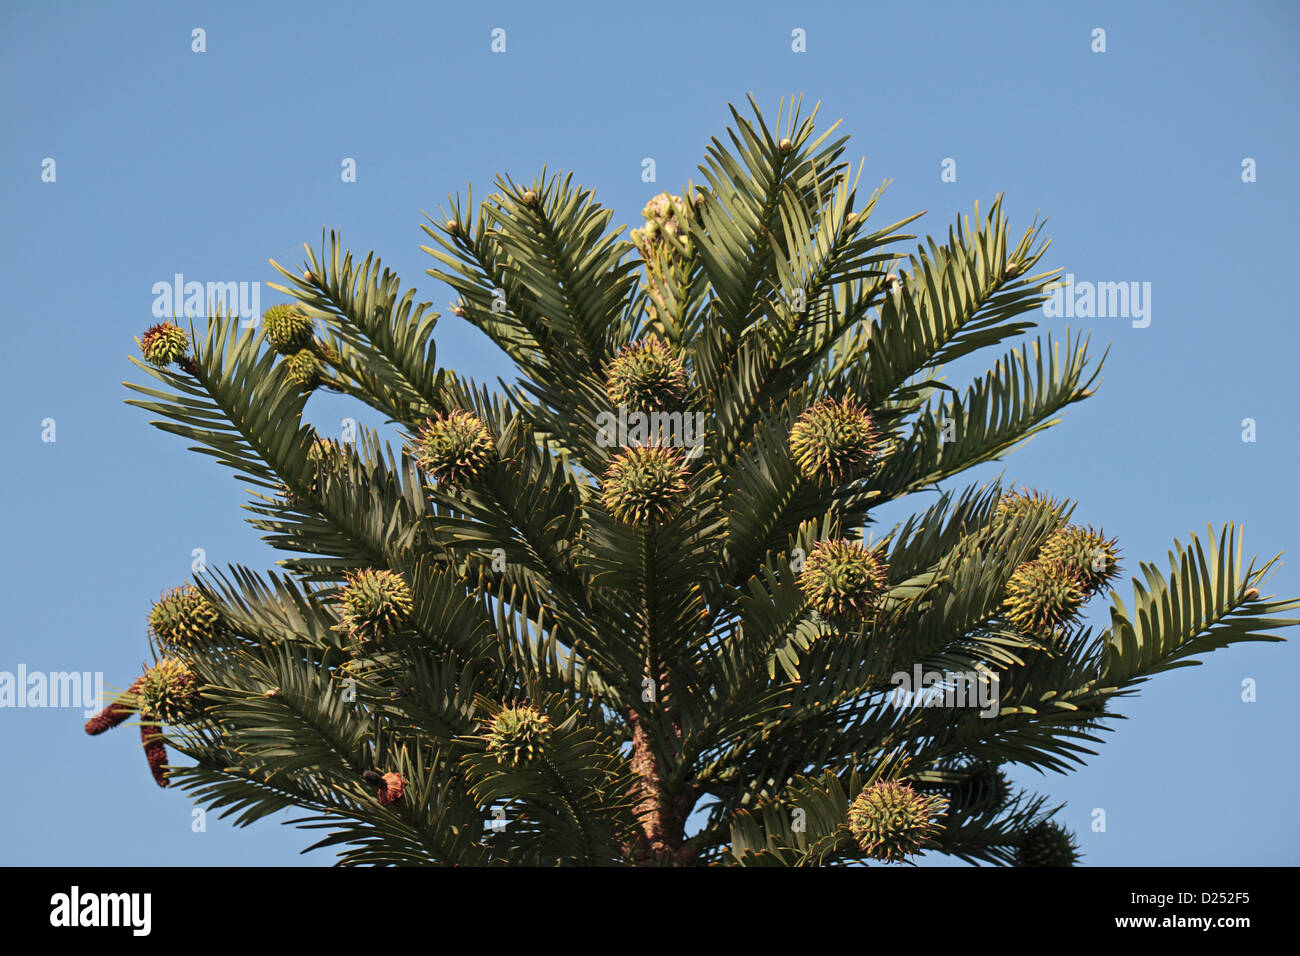 The Wollemi Pine (Wollemia nobilis), once thought extinct, flourishing in the Royal Botanic Gardens, Kew, Surrey, England. Stock Photo